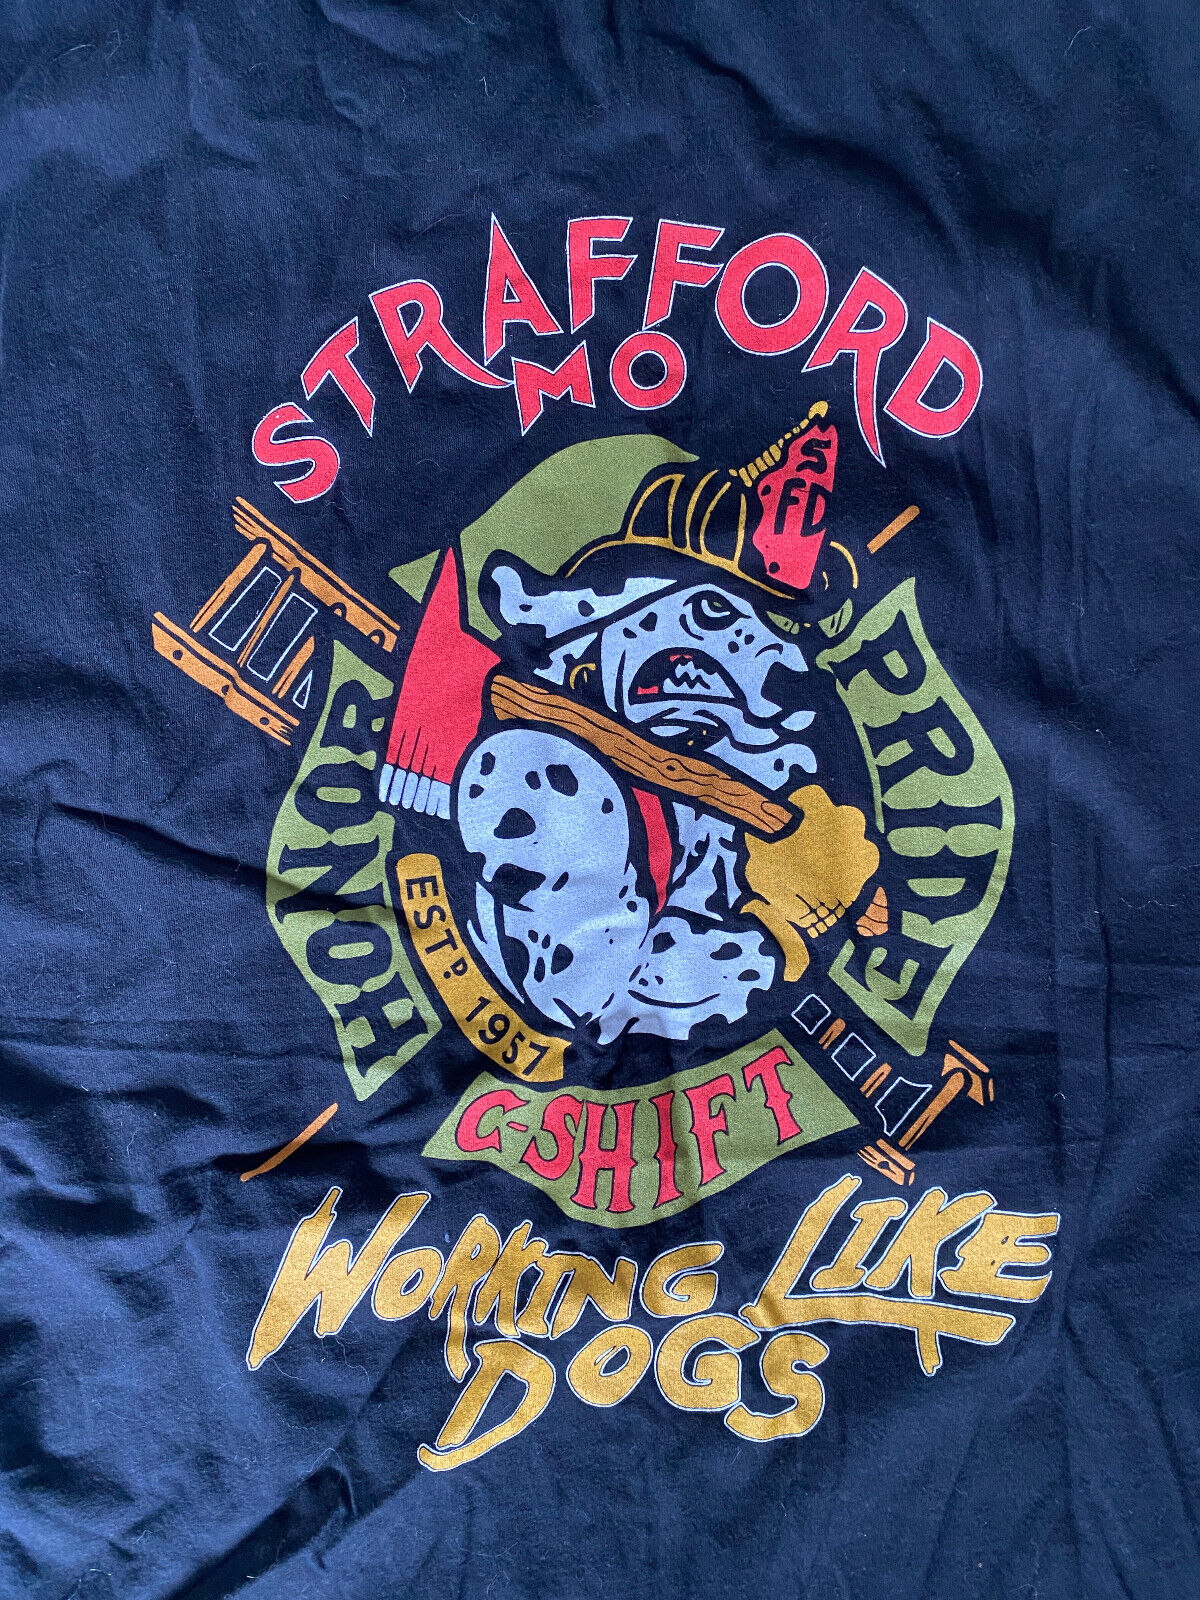 Strafford MO. C-Shift. Fire Rescue Department  T- Shirt Sz 2XL